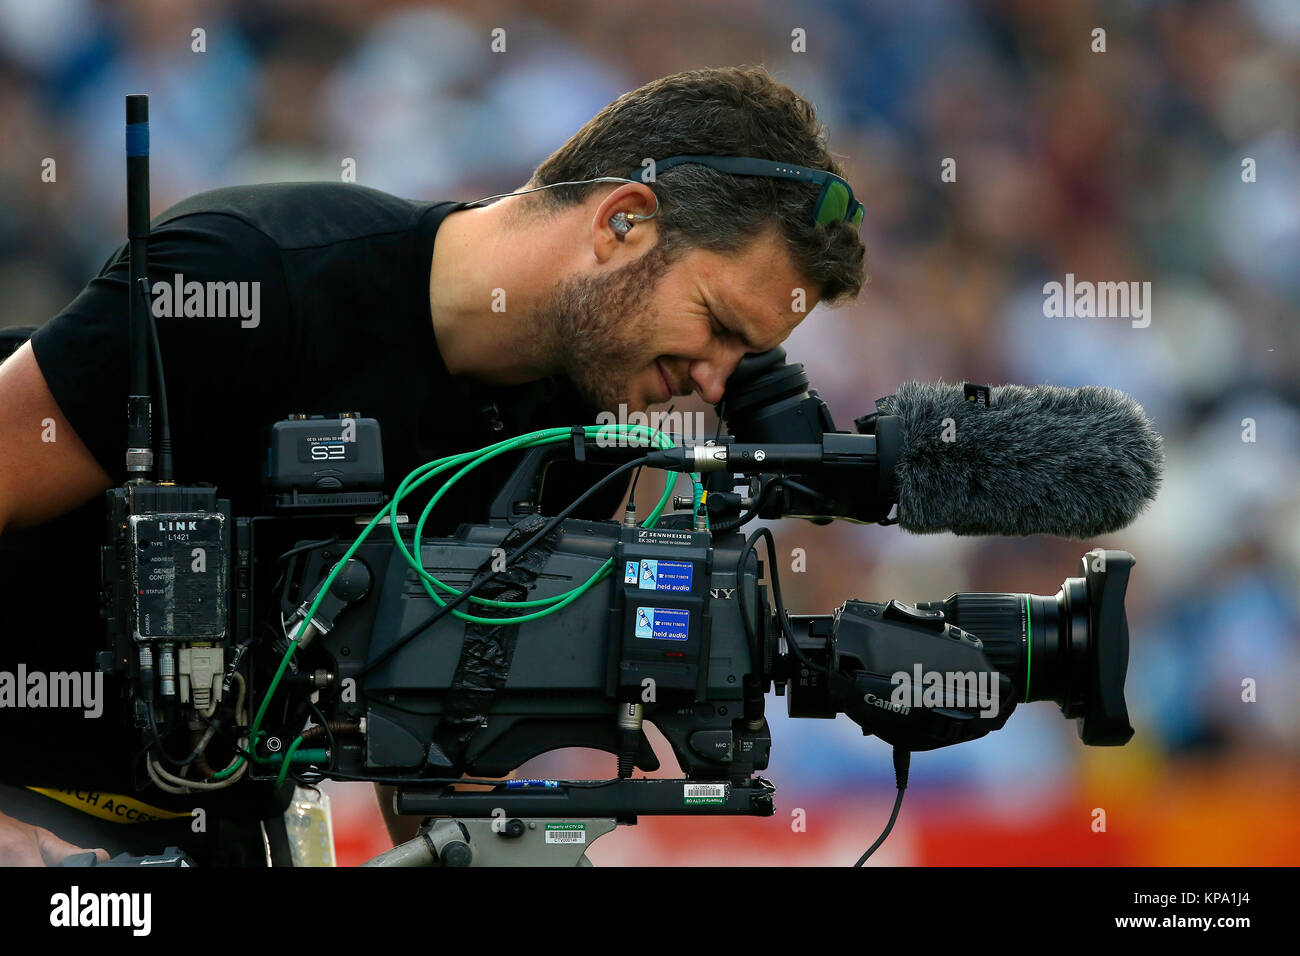 A Television Camera Man filming at a sports stadium. Stock Photo